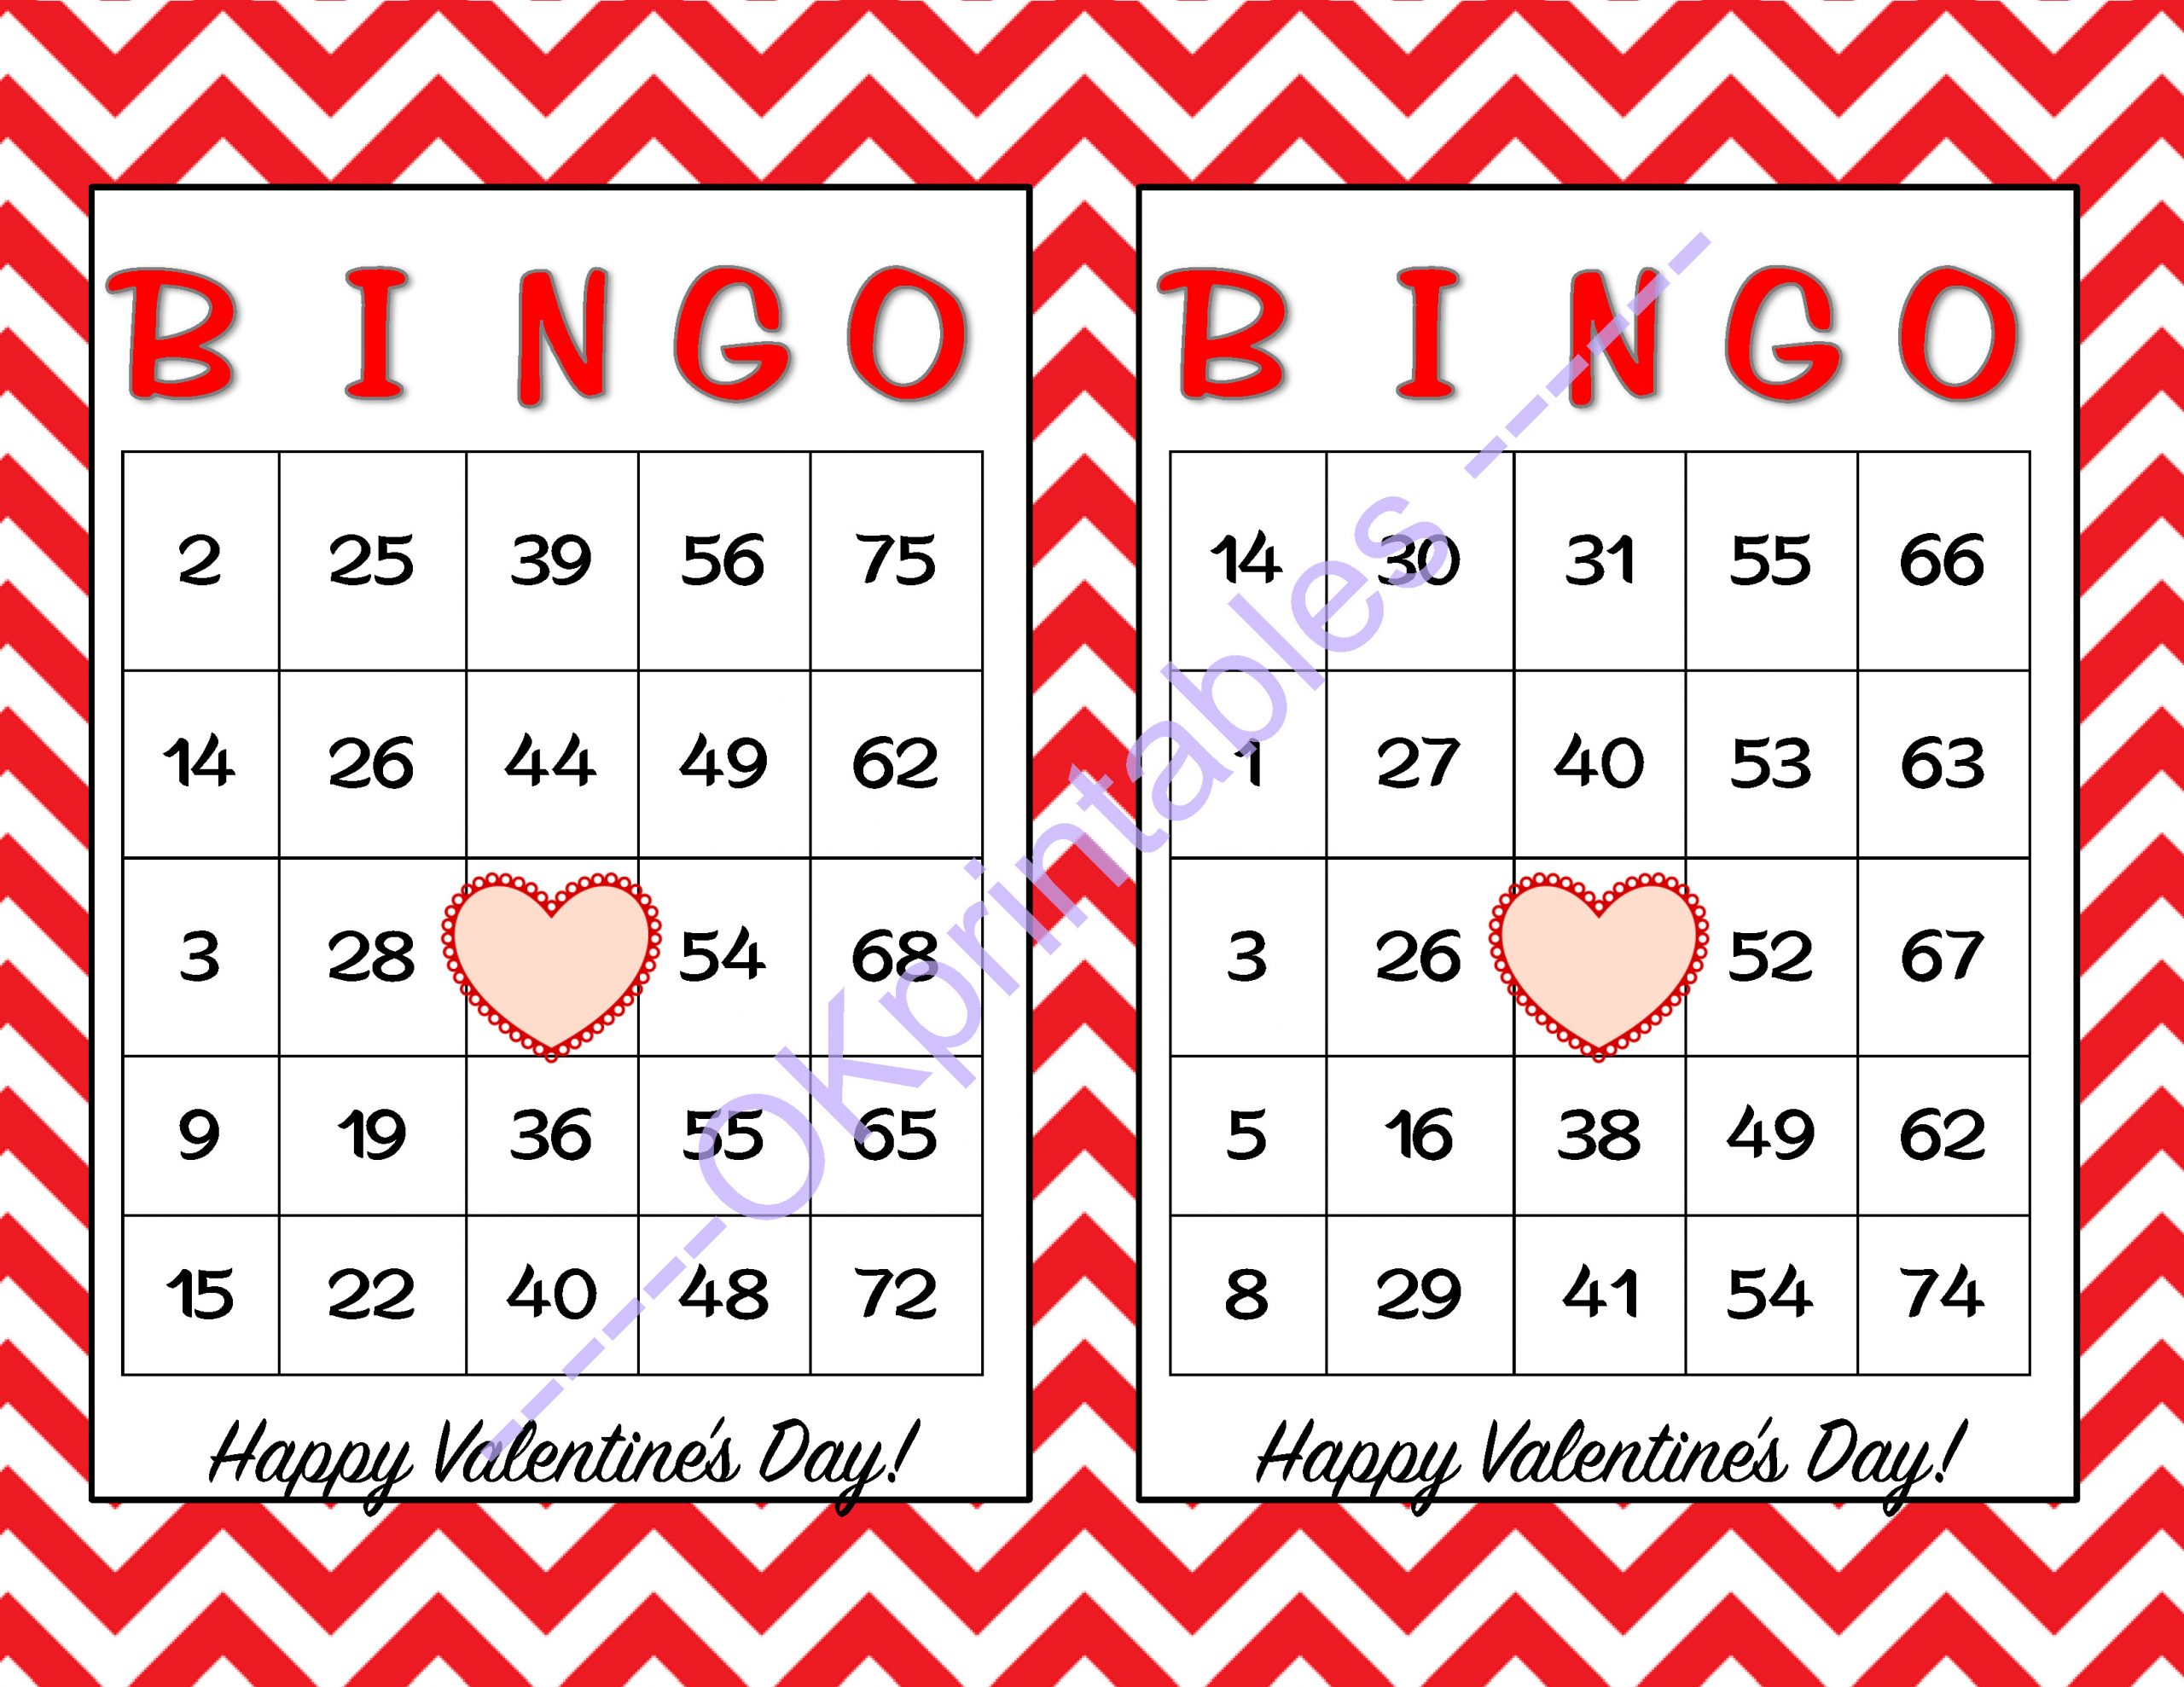 30 Happy Valentines Day Bingo Cards By Okprintables On 